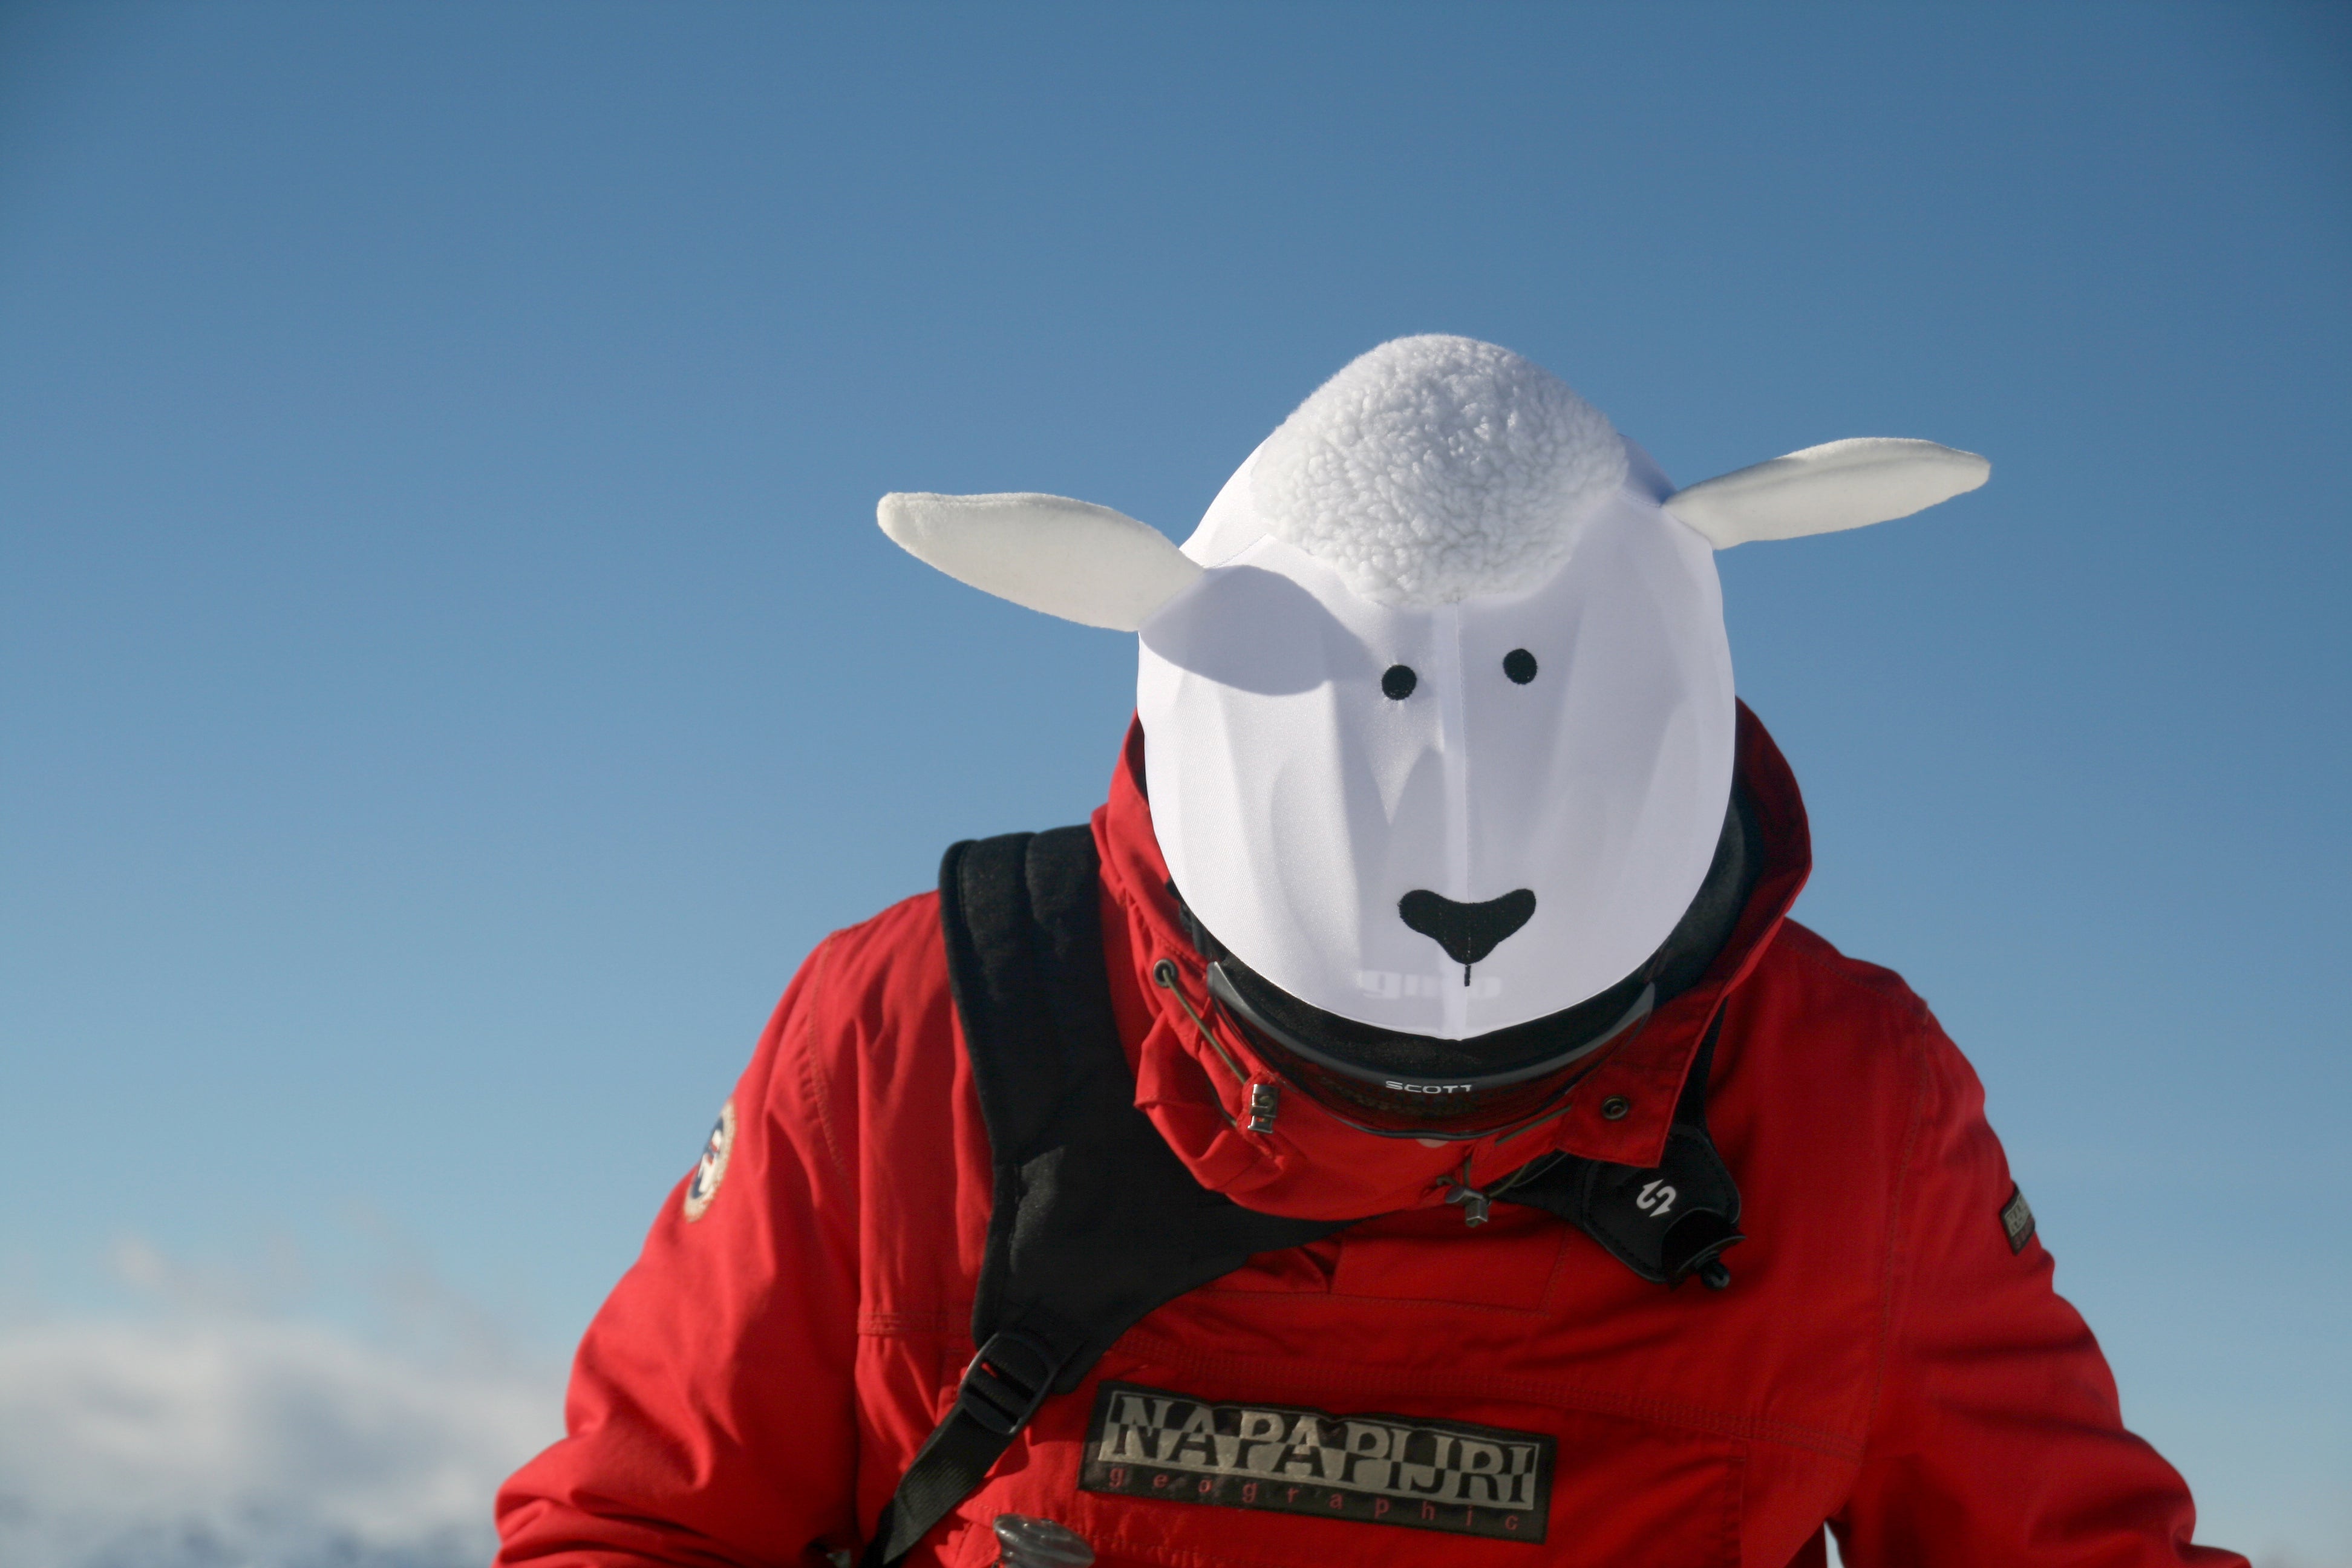 Coolcasc White Sheep Helmet Cover